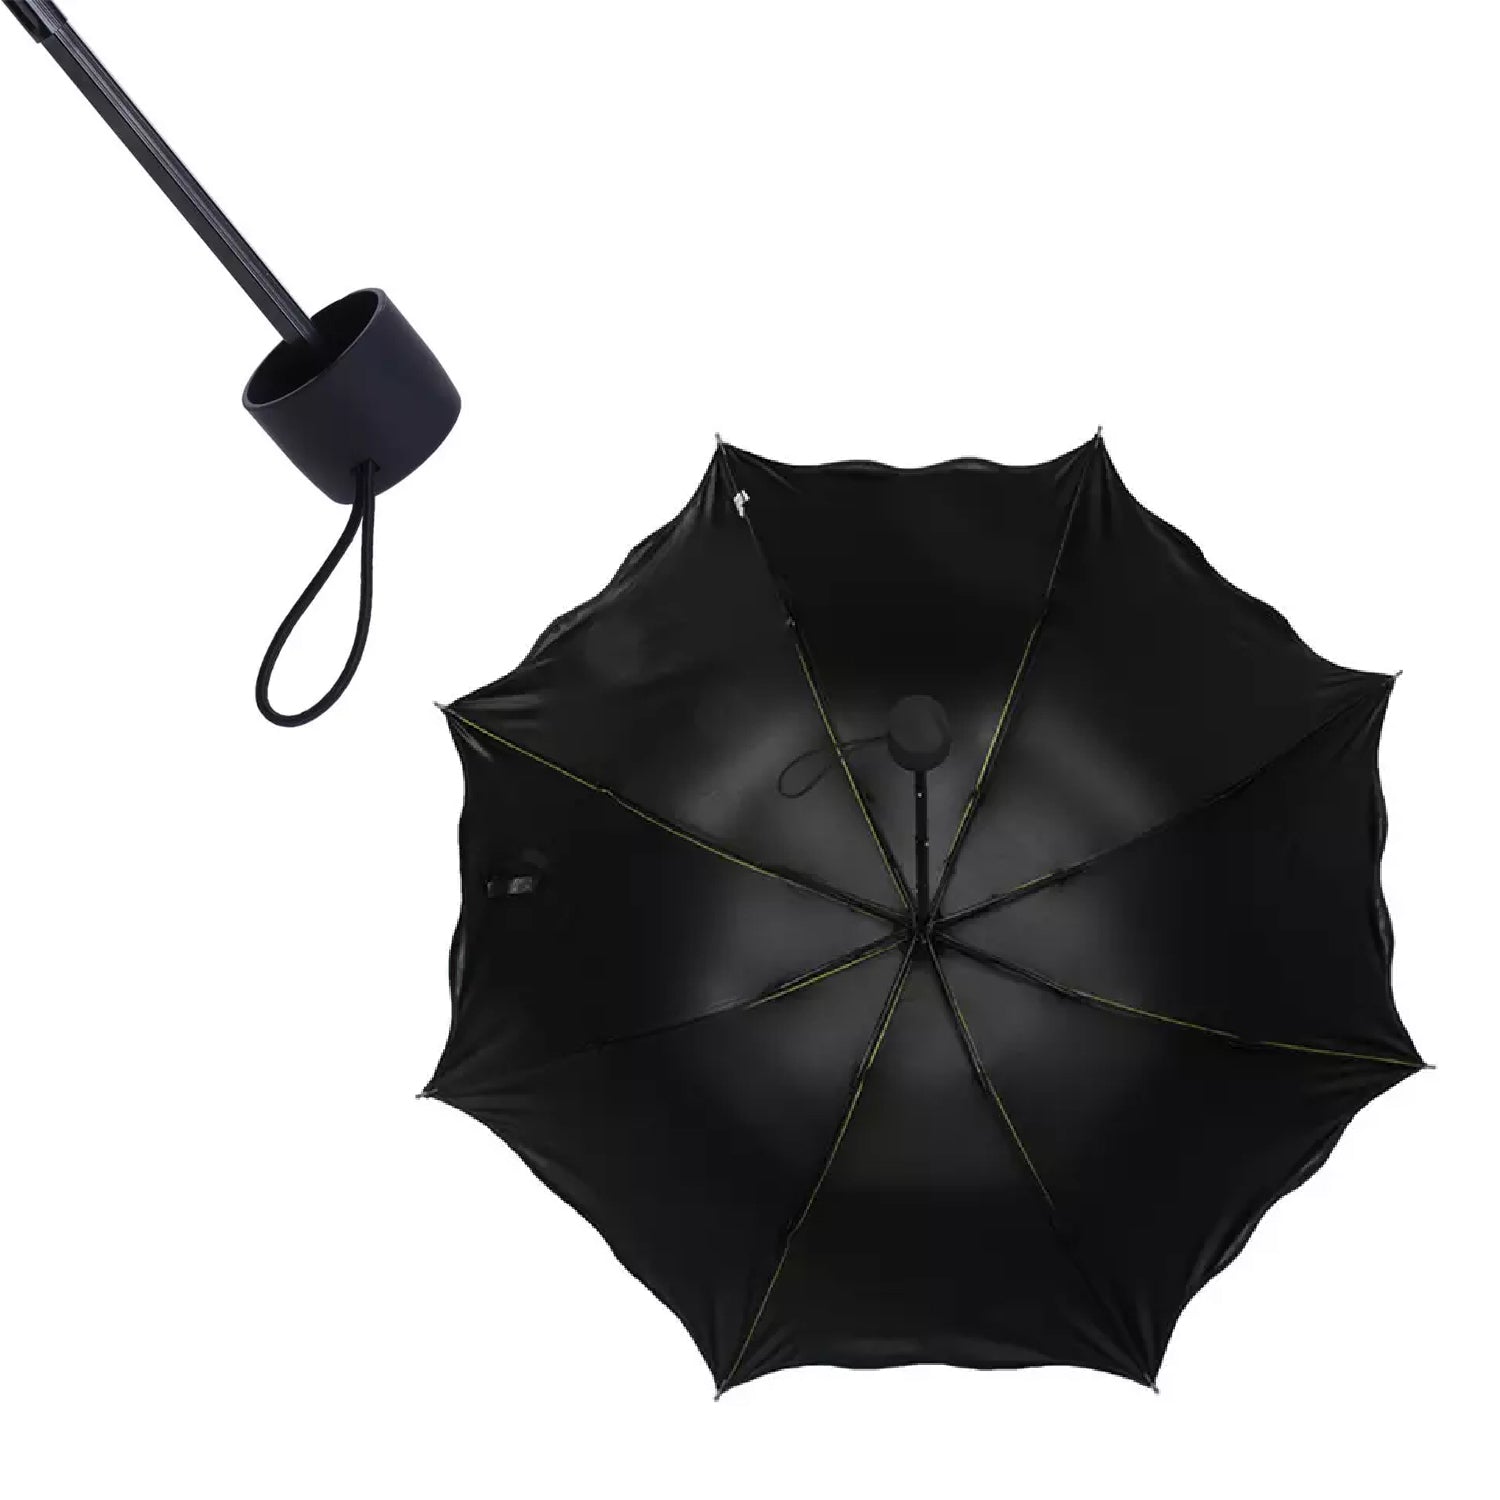 Magic Blossom Umbrella with Water Print